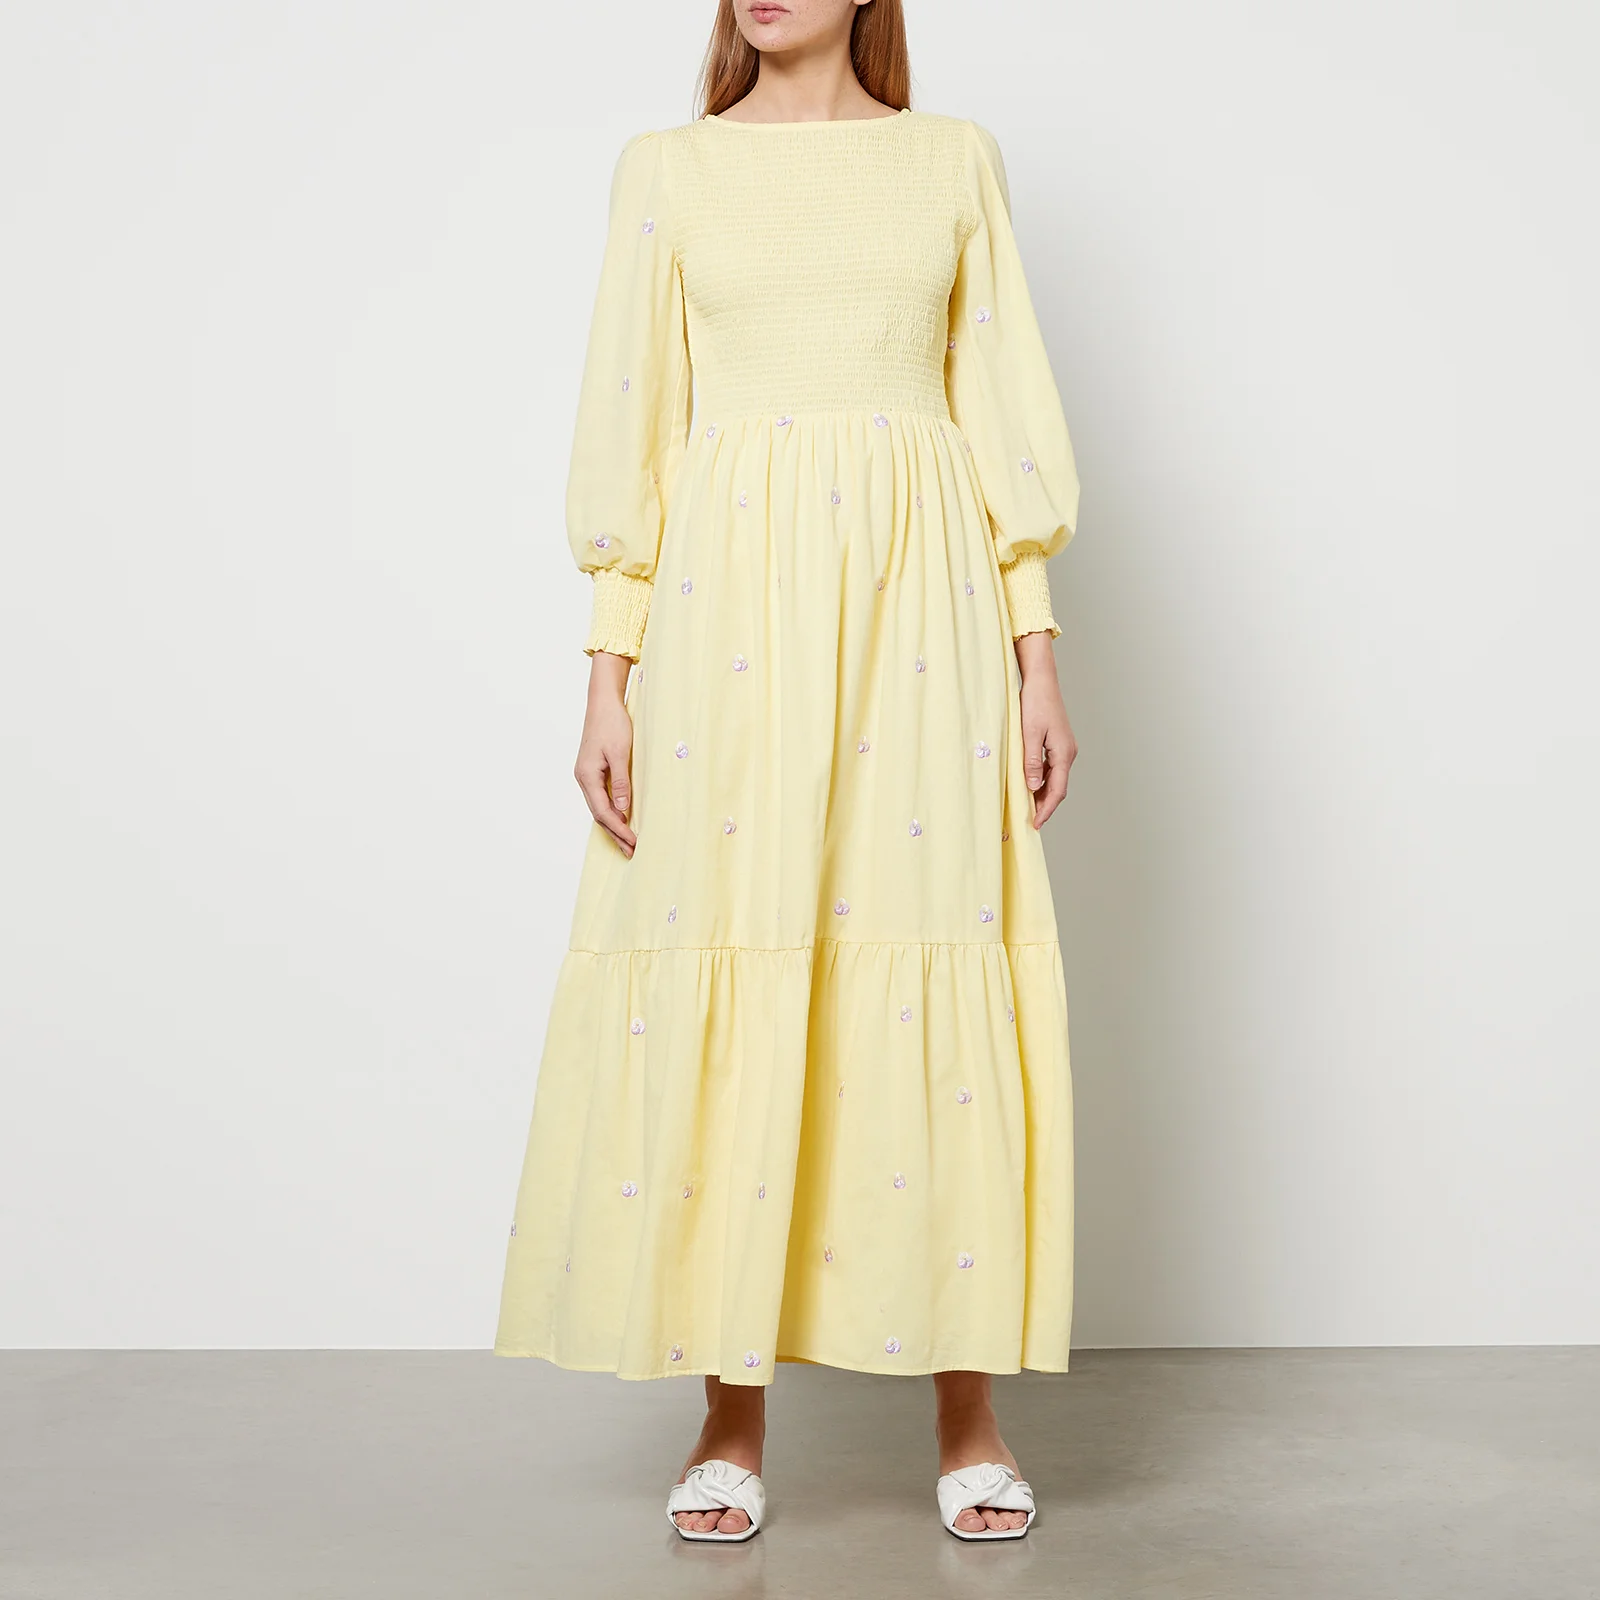 Olivia Rubin Women's Sadie Midi Dress - Yellow Image 1